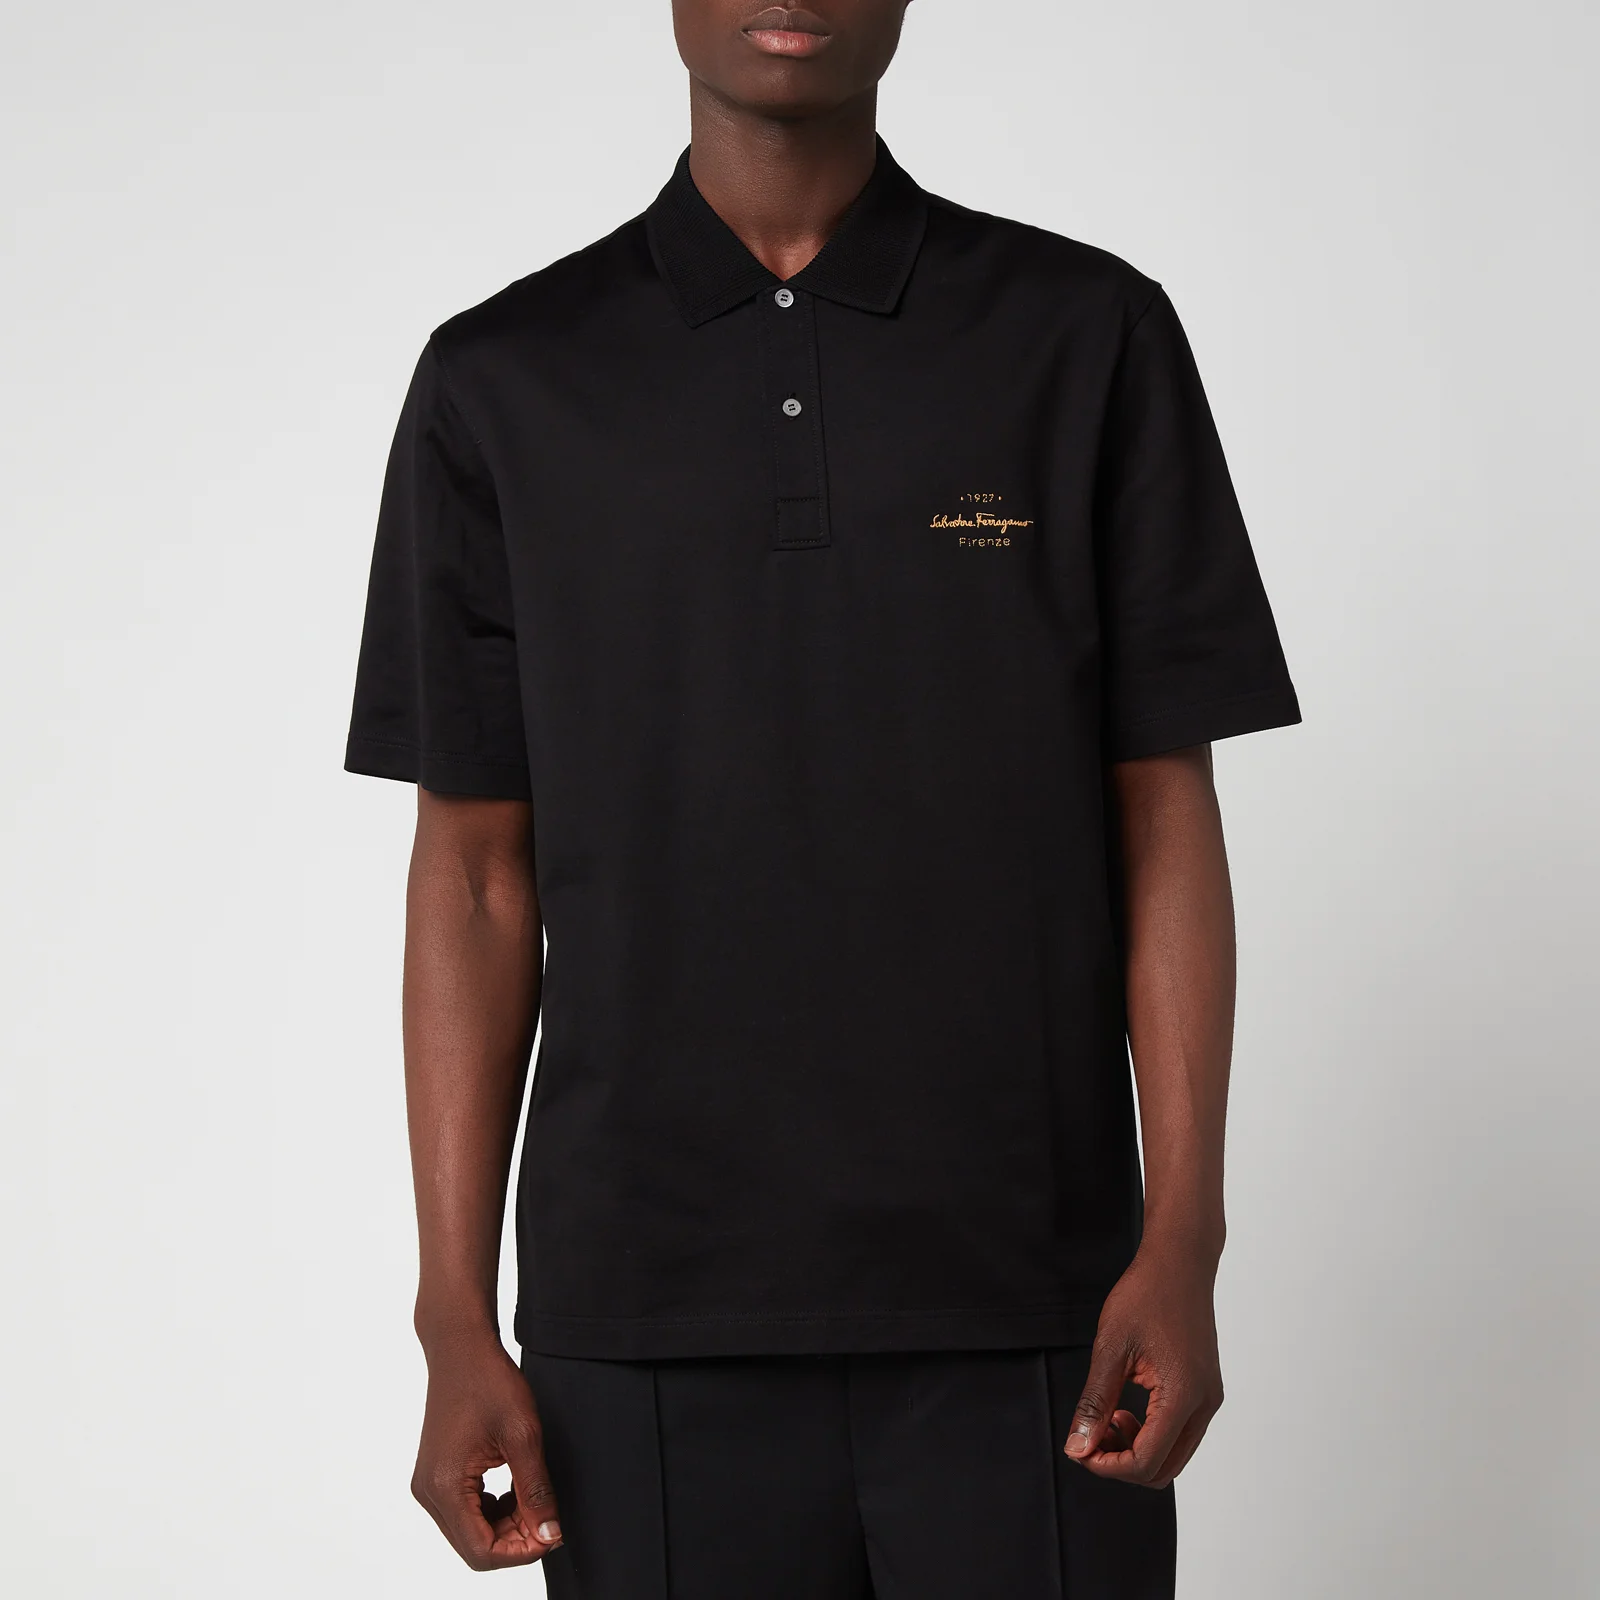 Ferragamo Men's Short Sleeve Polo Shirt - Black Image 1